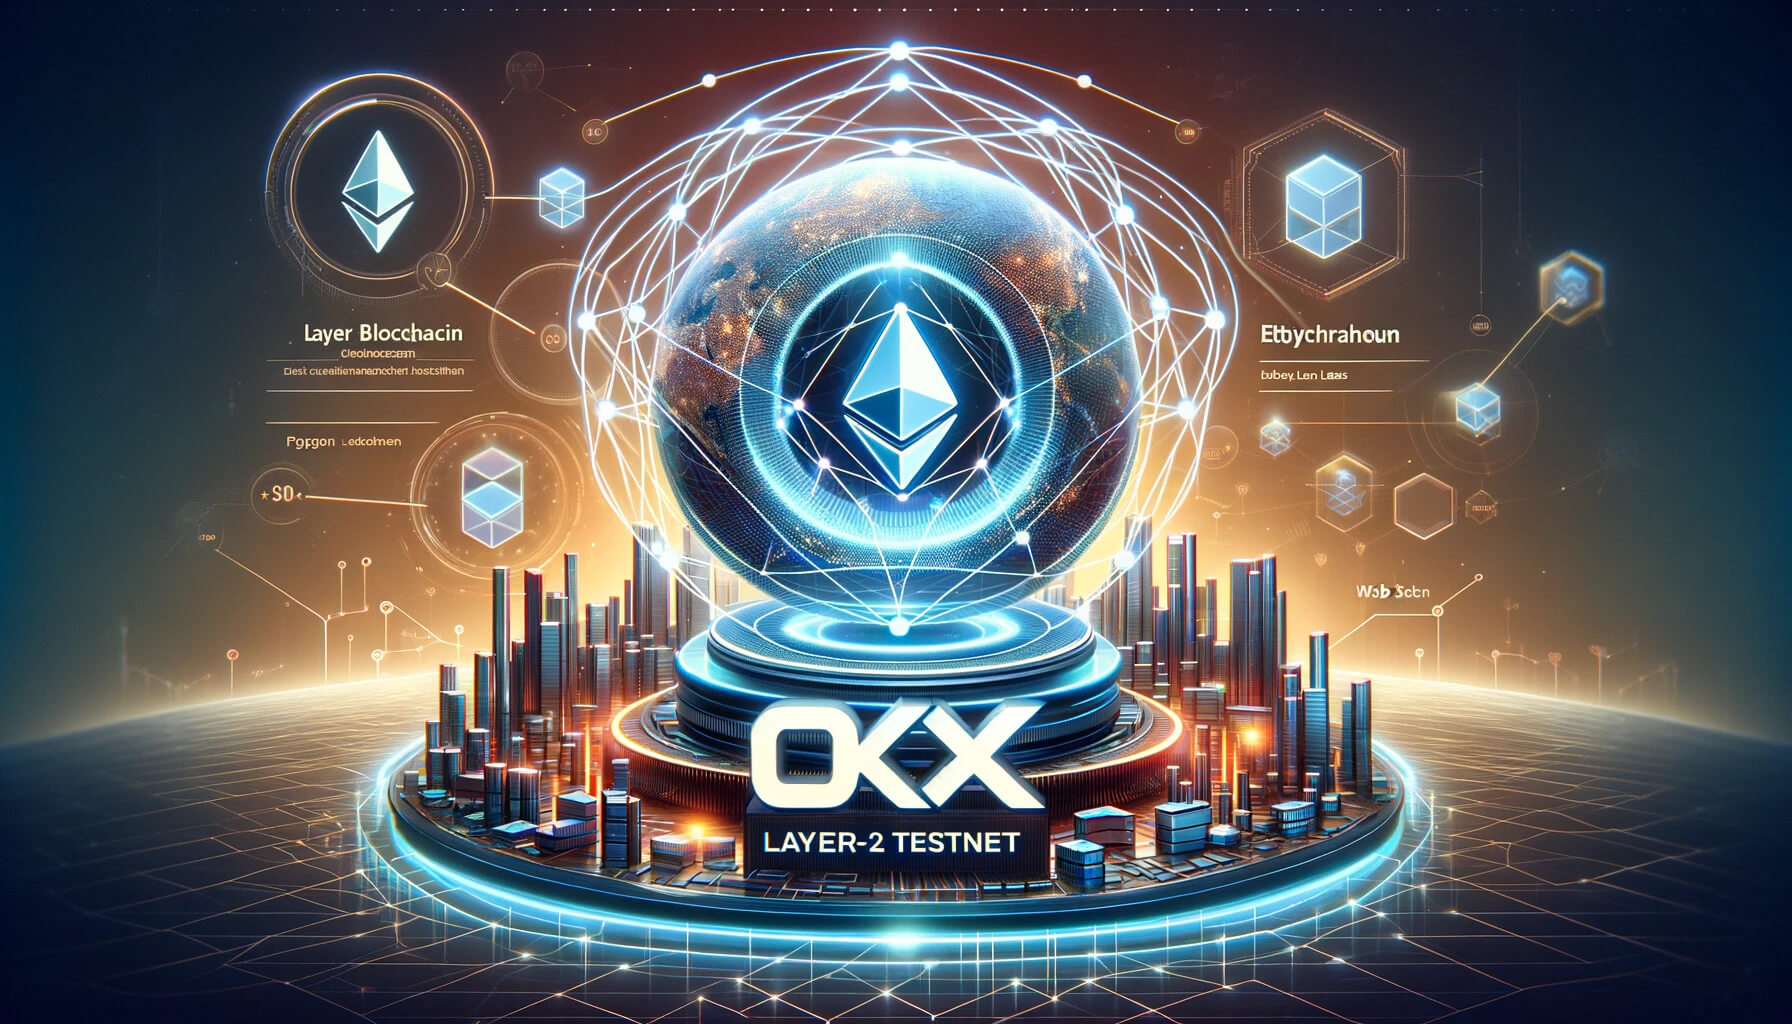  polygon chain development okx network kit testnet 